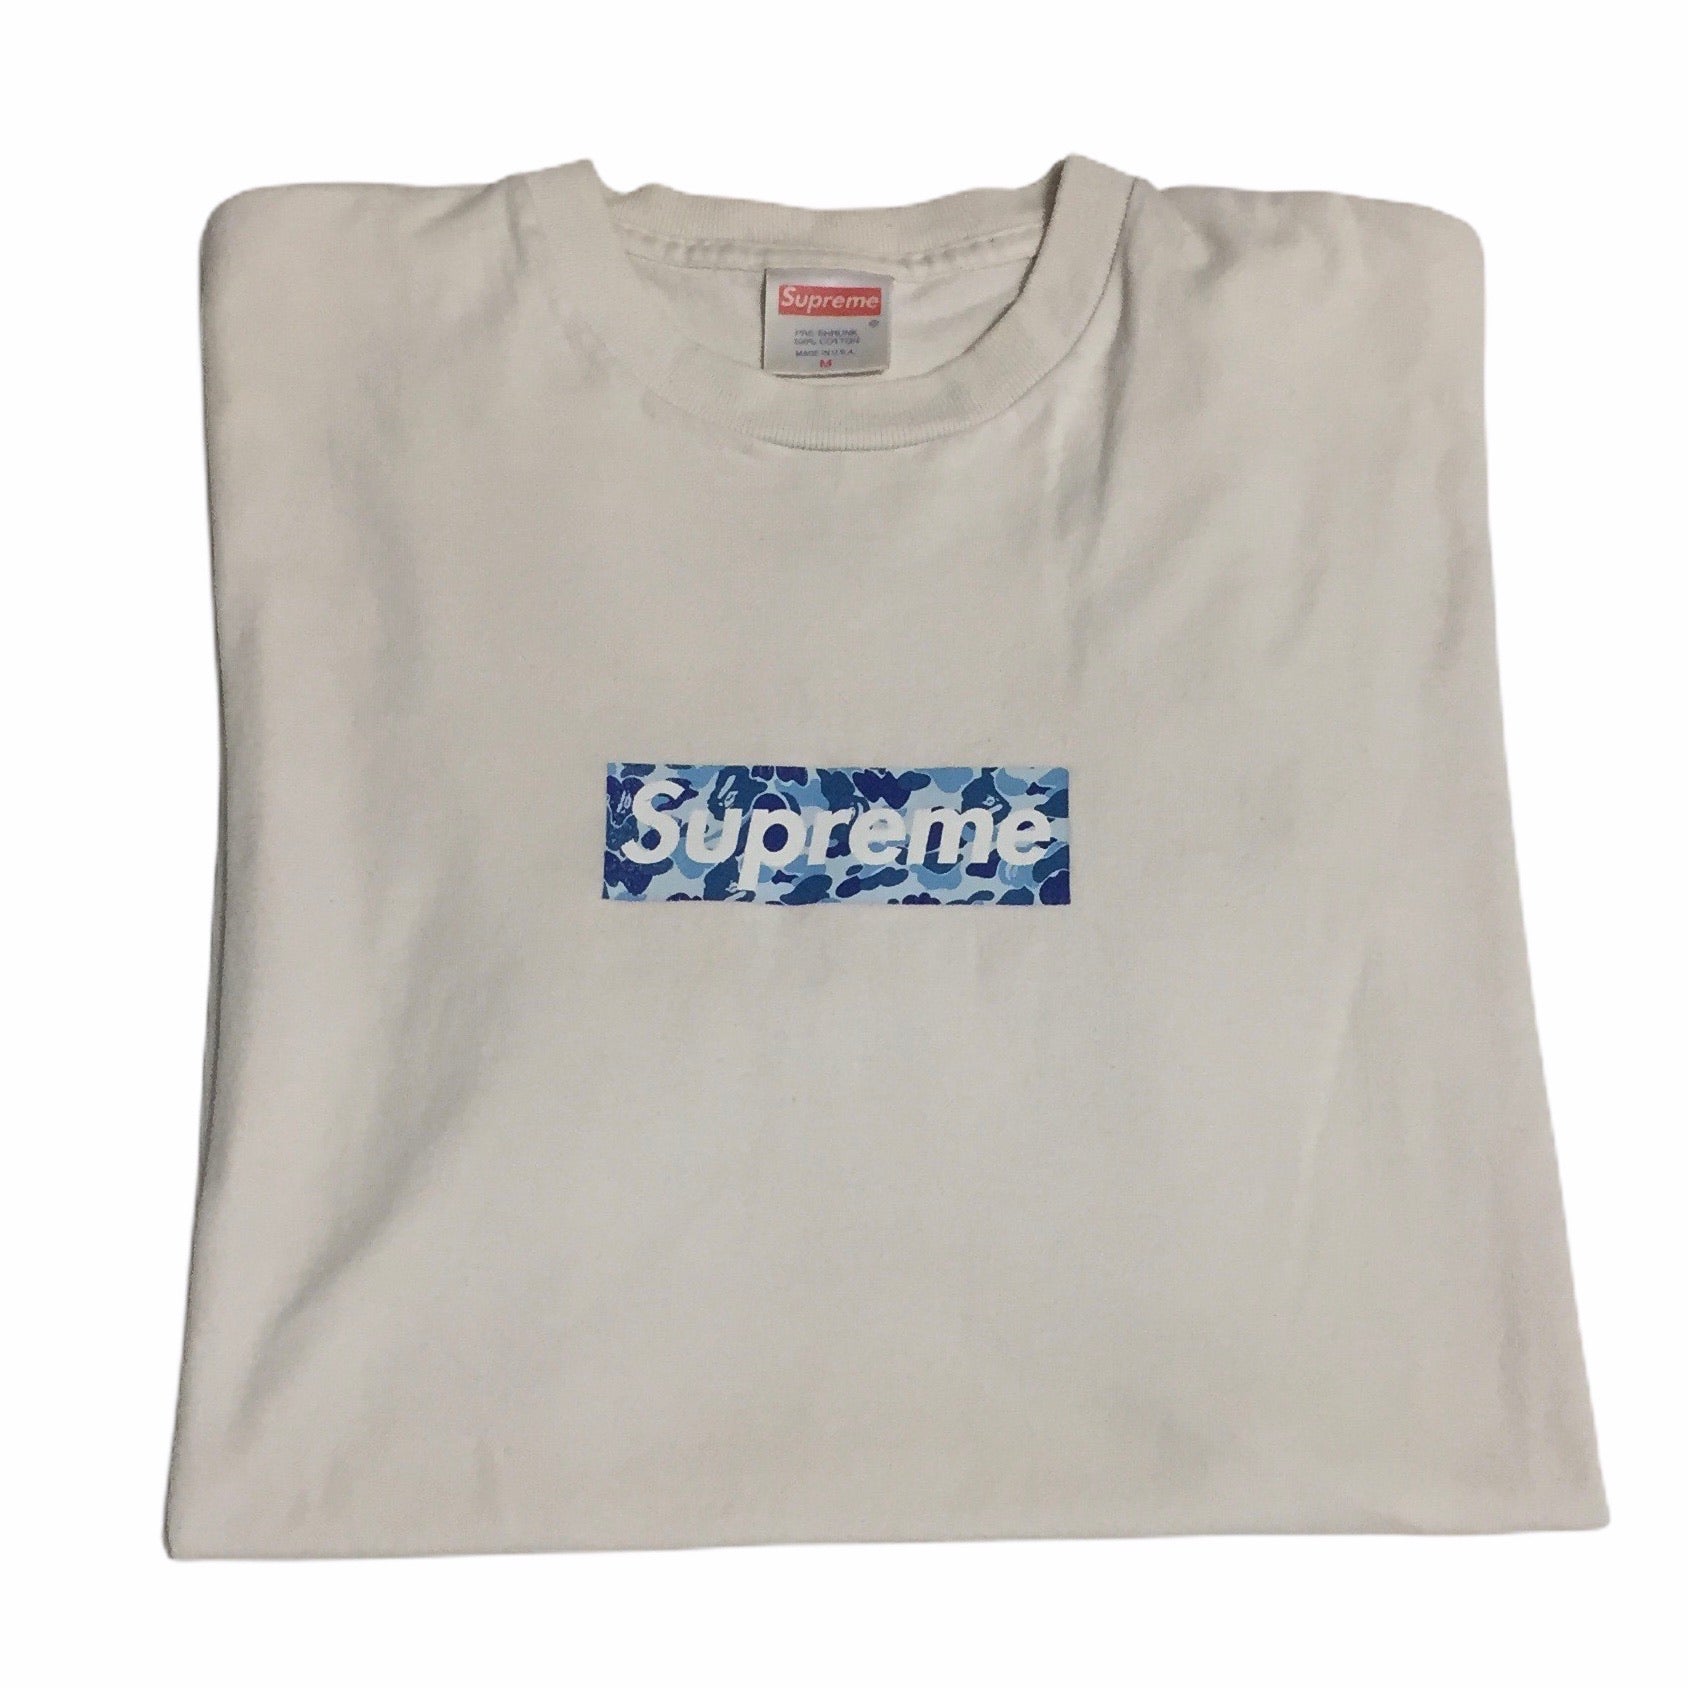 supreme bape shirt